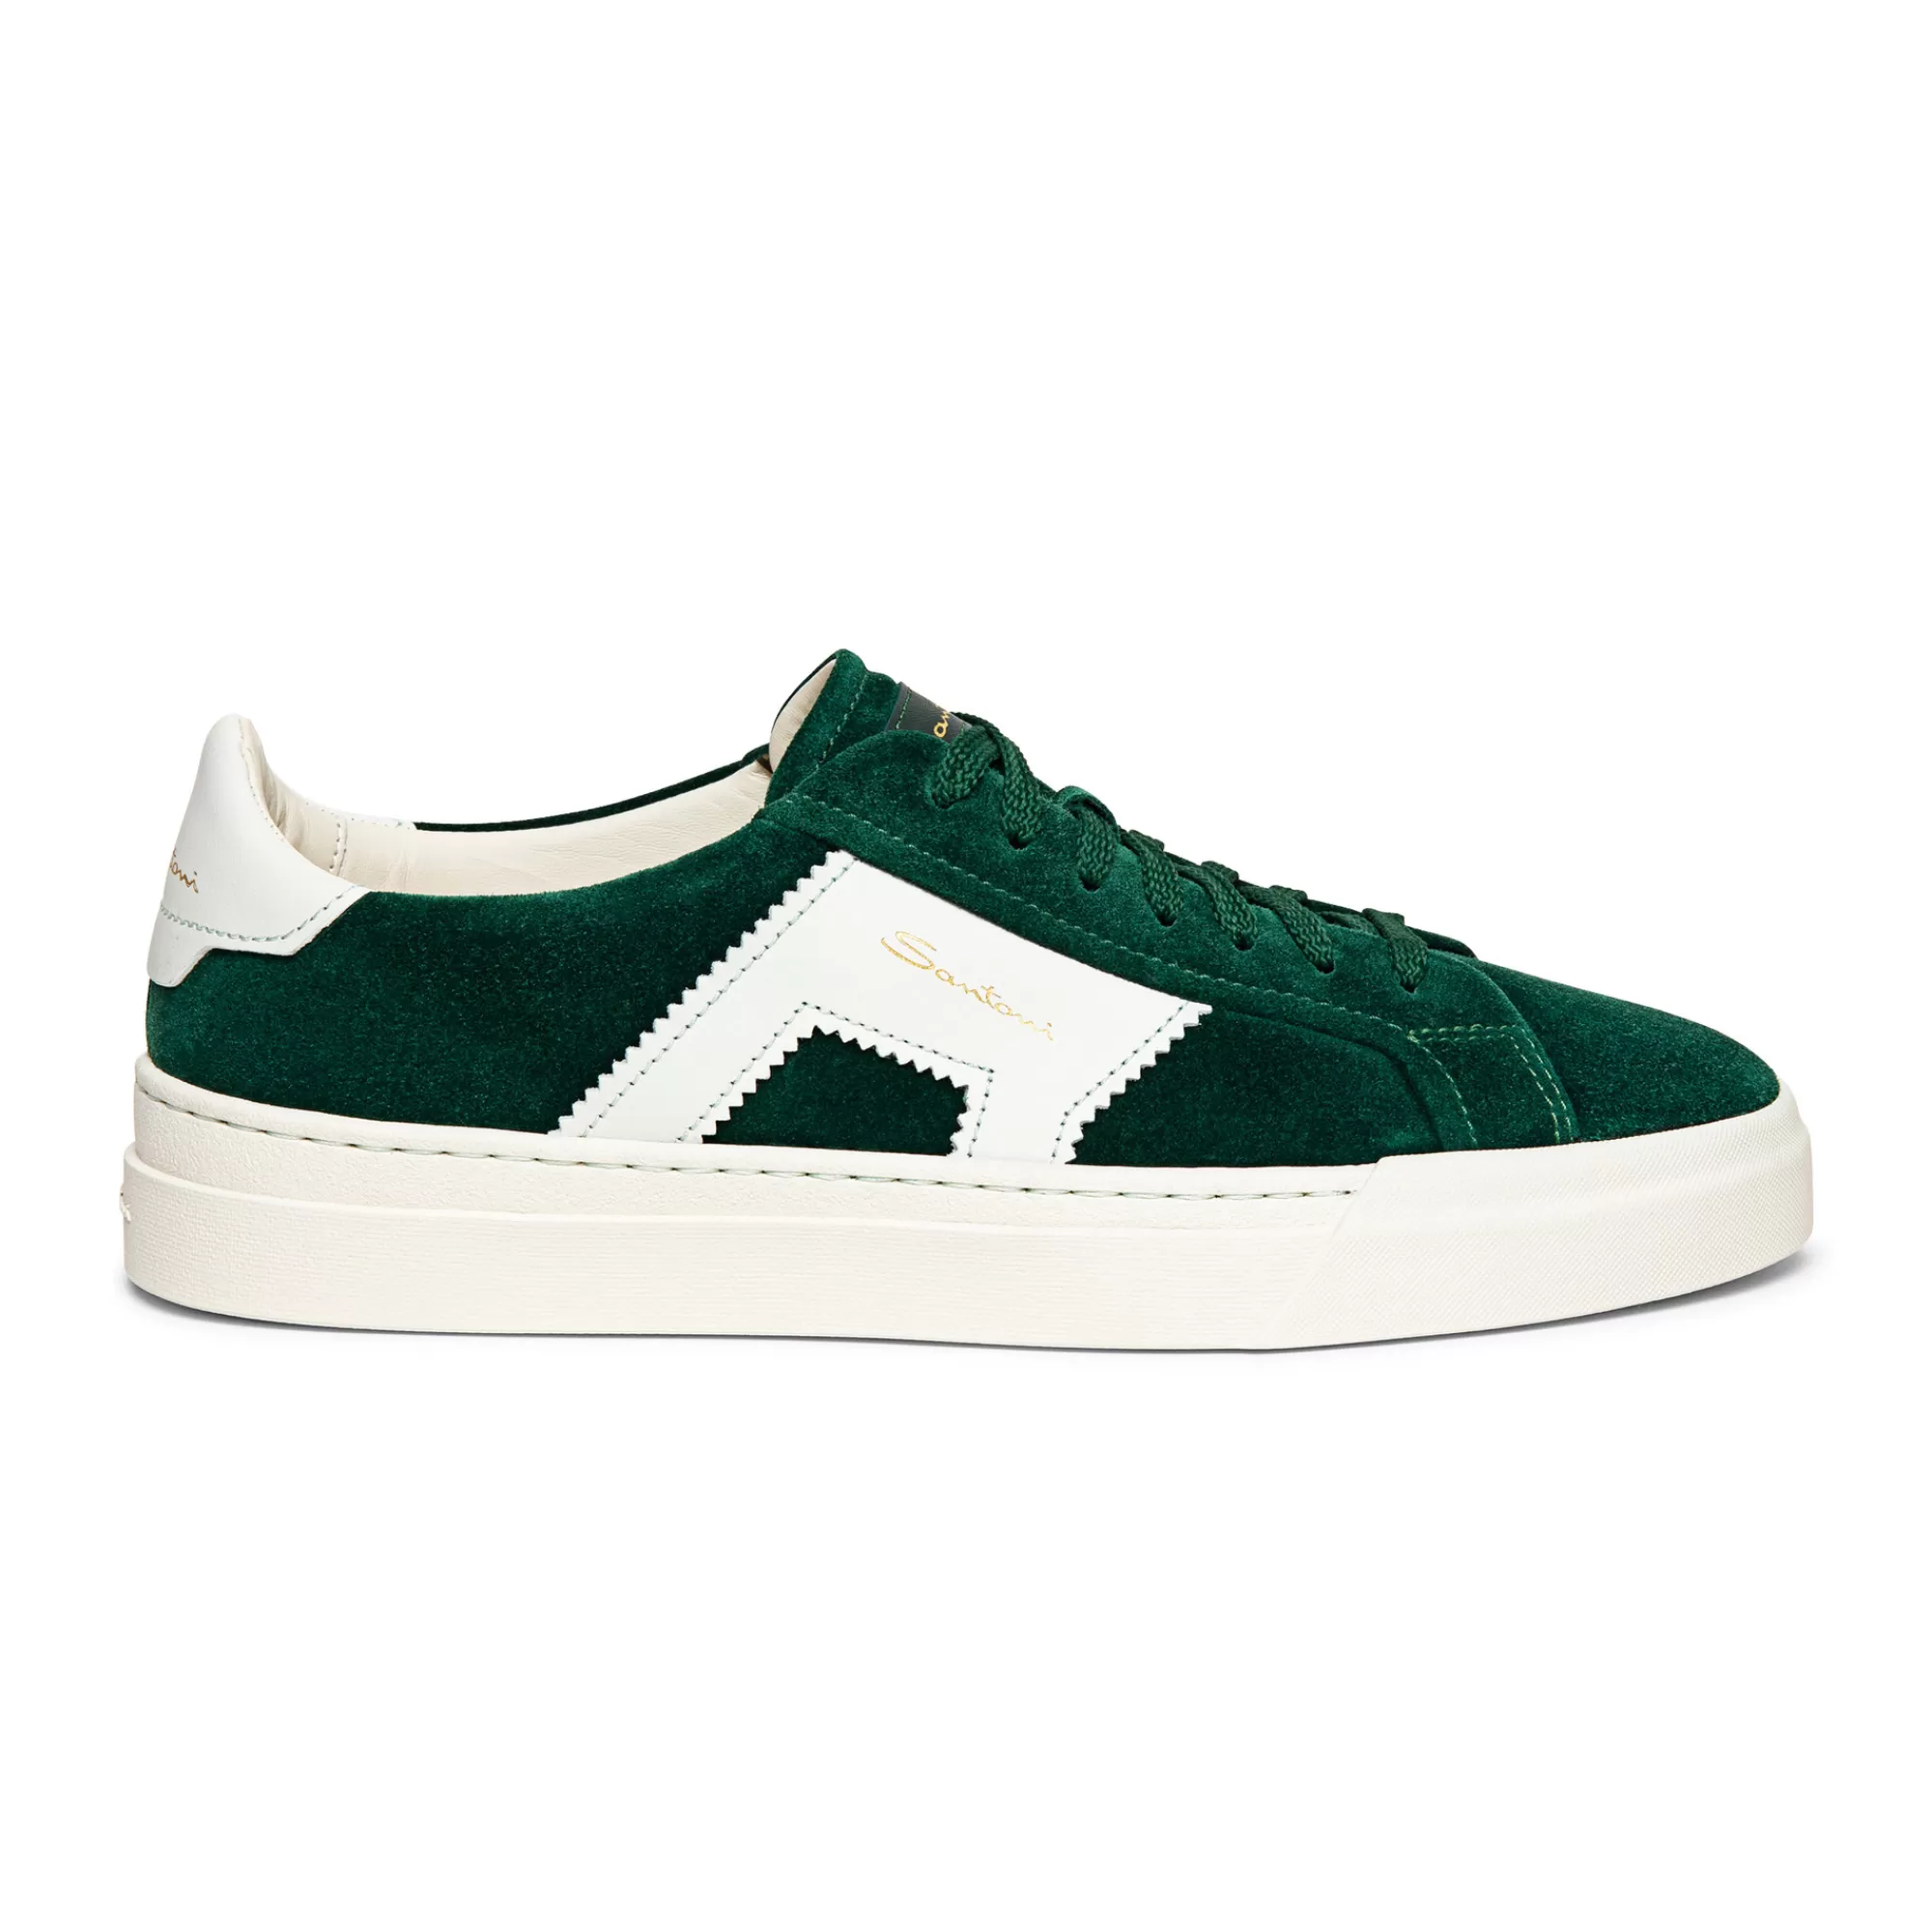 Cheap Double buckle sneaker da uomo in suede e pelle verde e bianca Vedi tutte le calzature | Sneakers